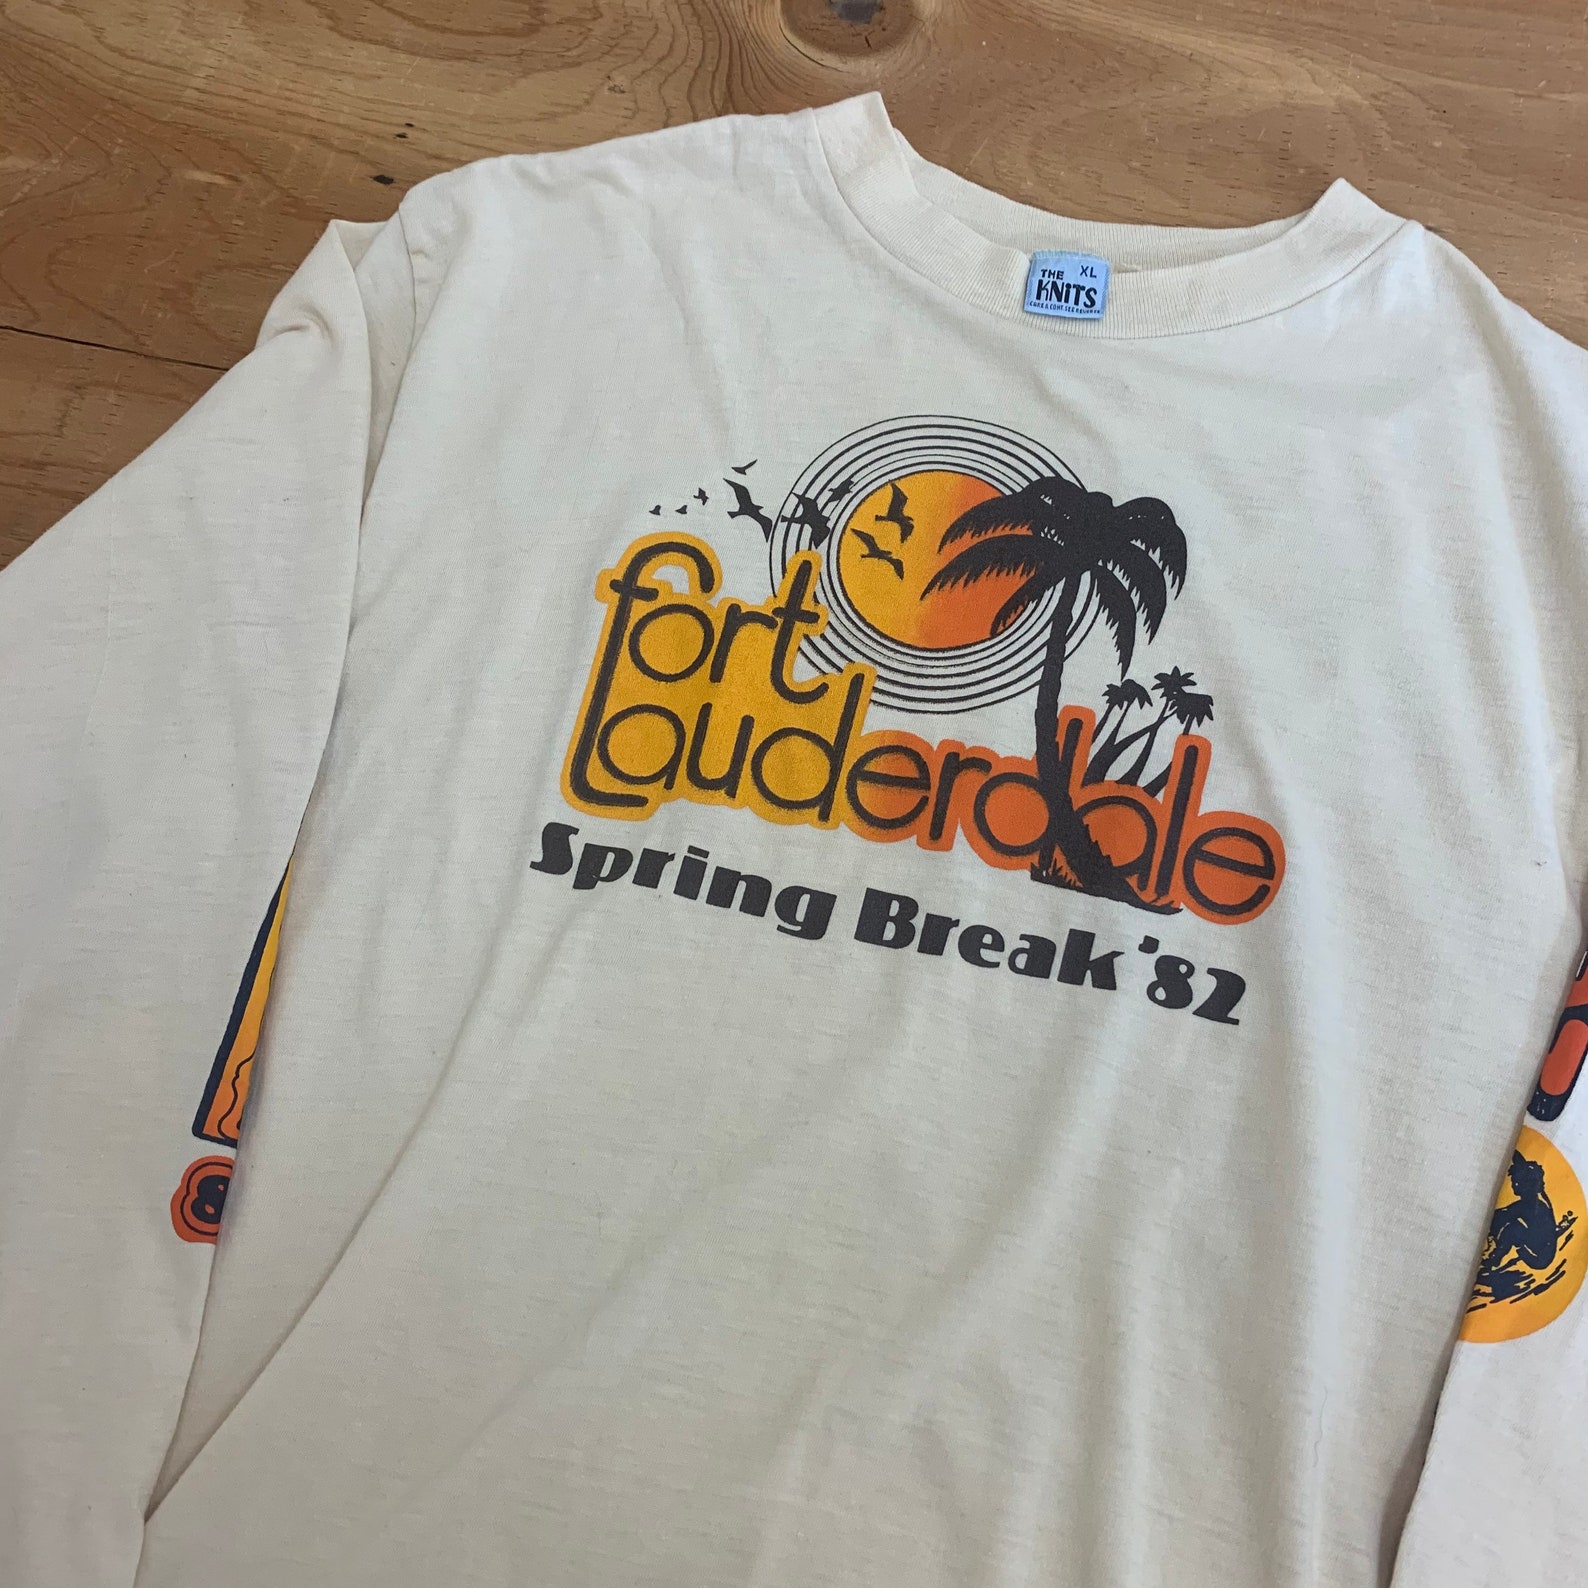 Vintage Fort Lauderdale Spring Break 82 Long Sleeve T-Shirt / | Etsy